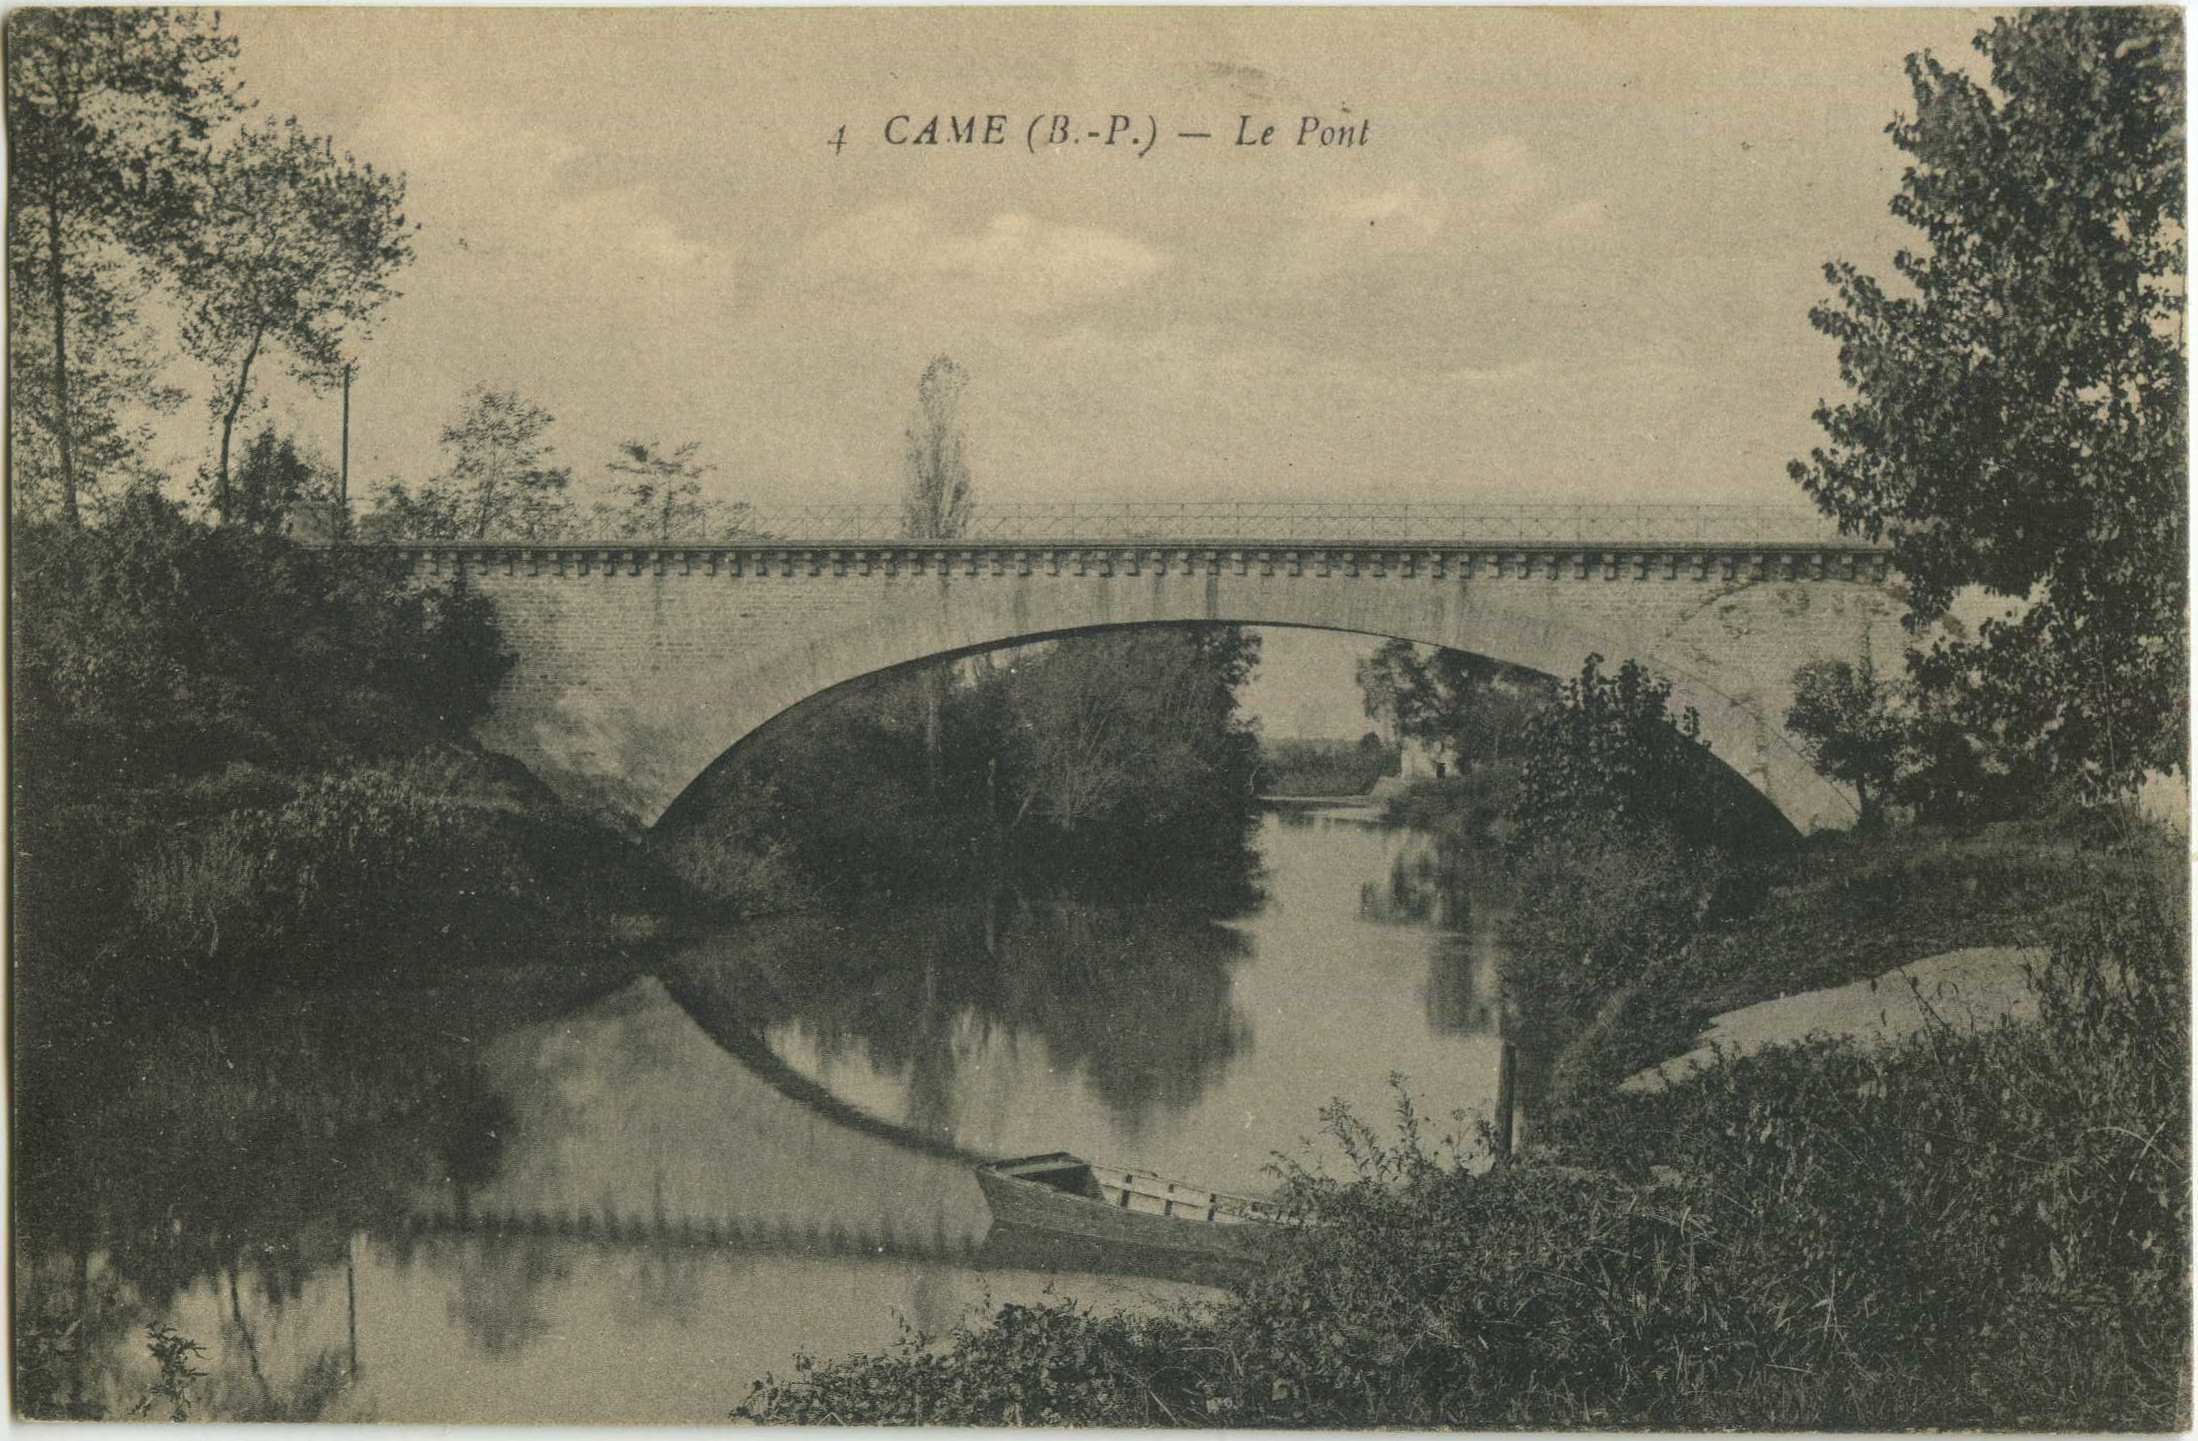 Came - Le Pont